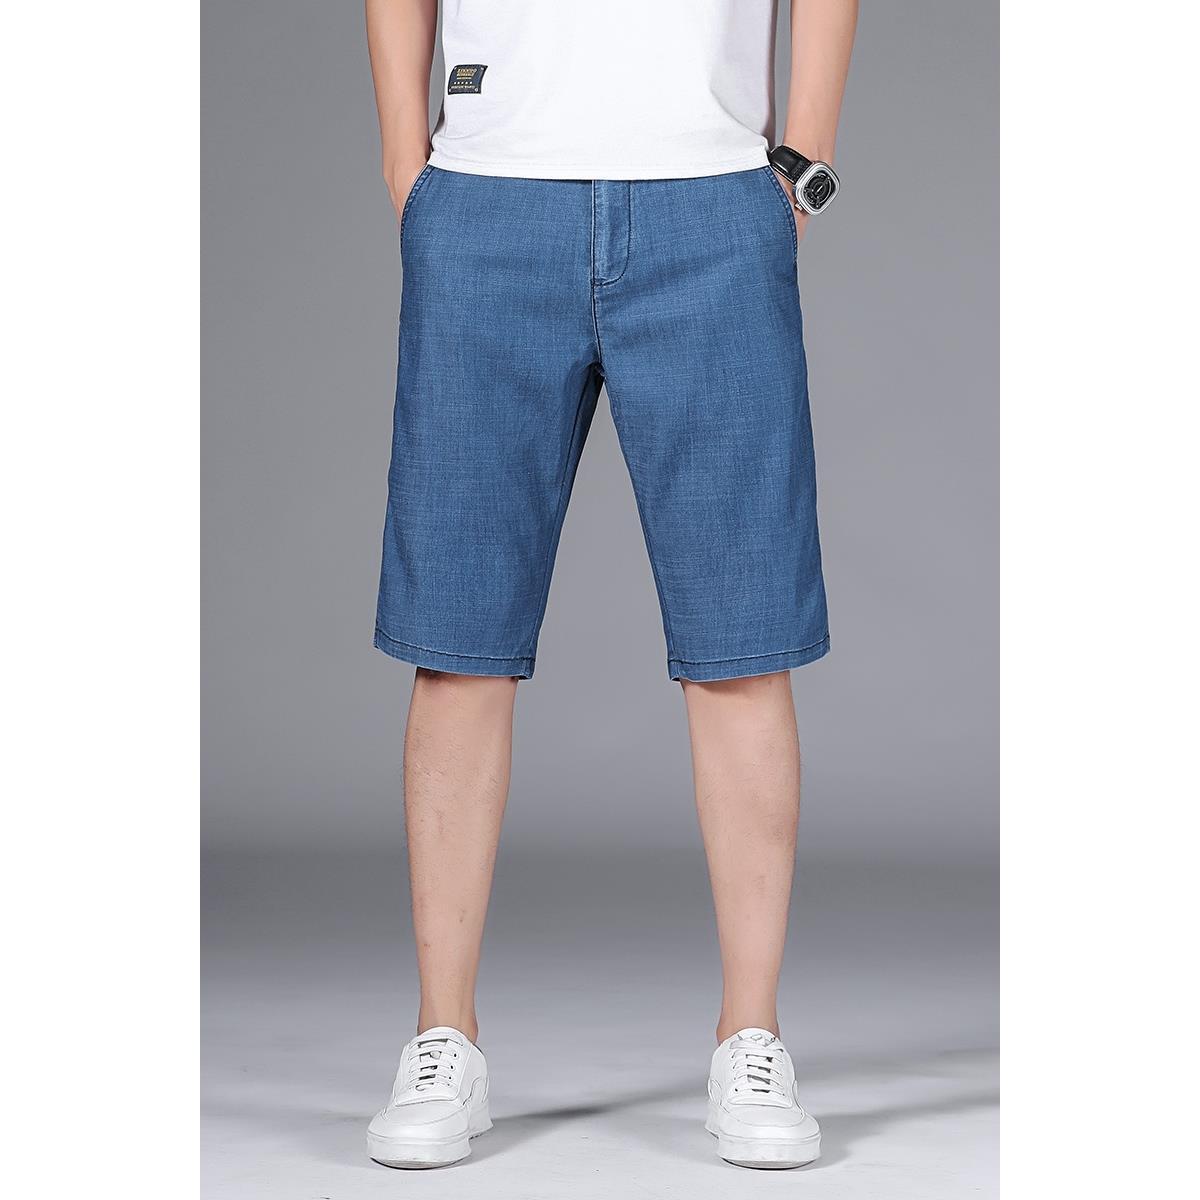 Baiyuan pants industry summer thin tencel denim shorts men's loose straight five-point pants high waist middle-aged pants